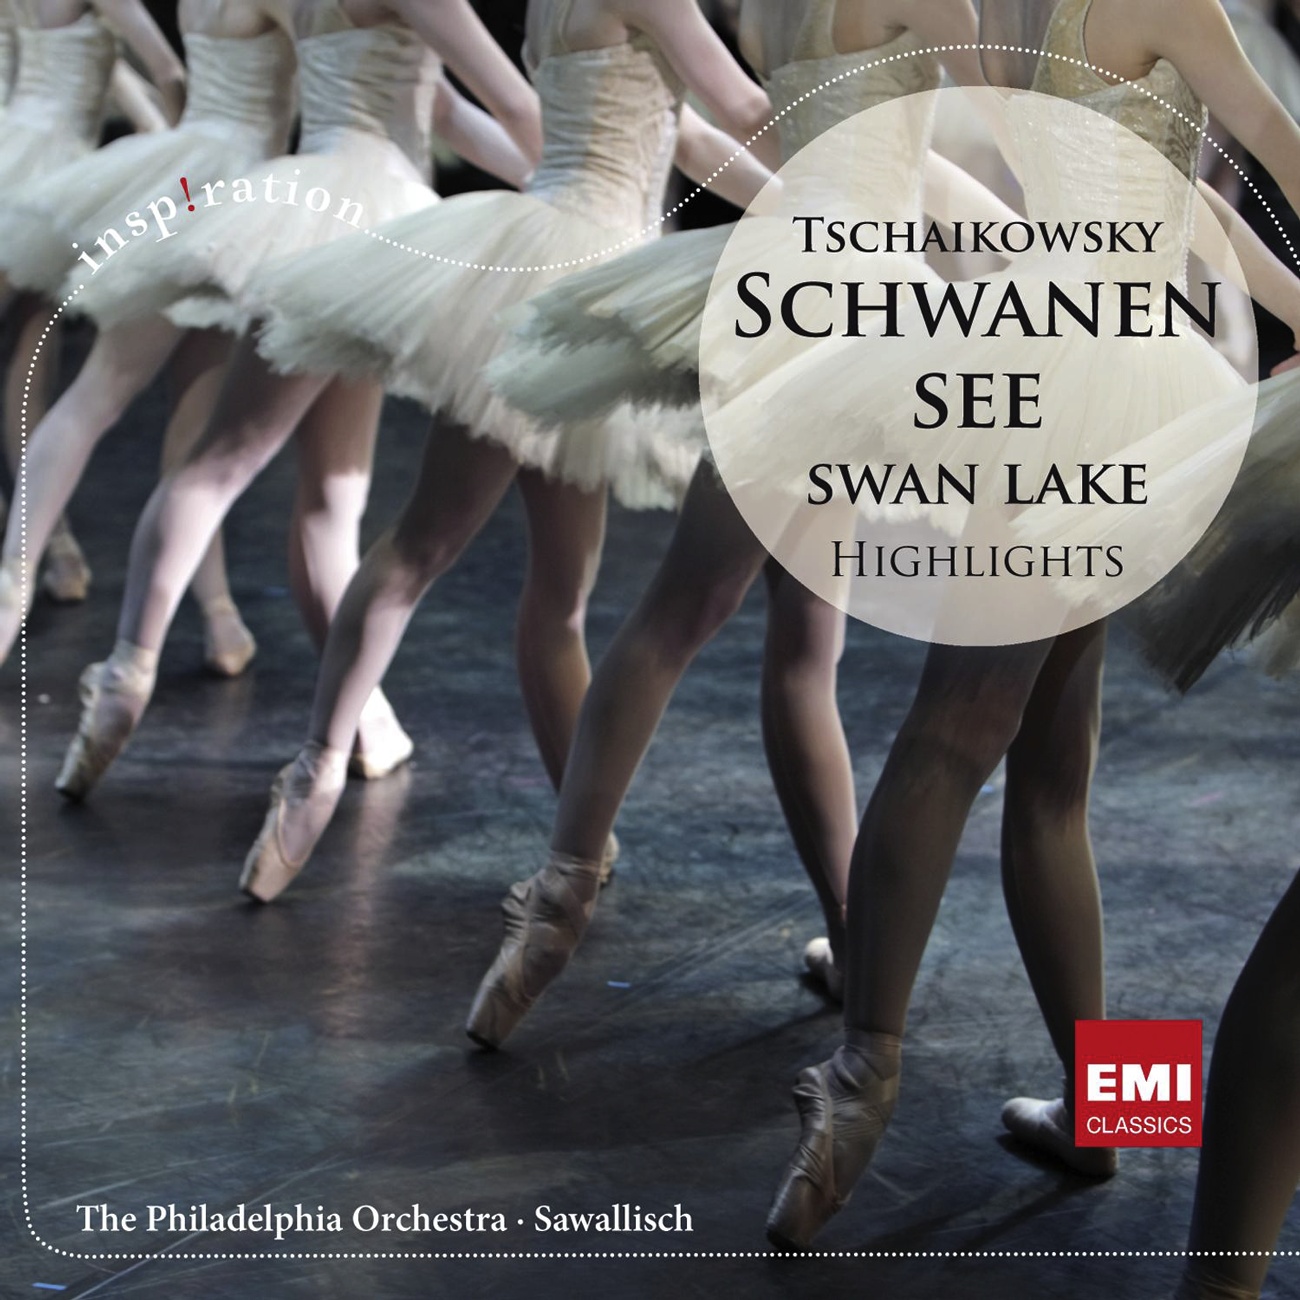 Swan Lake - Ballet in four acts Op. 20, ACT 3: No. 22 - Danse napolitaine (Allegro moderato - Andantino quasi moderato - Presto